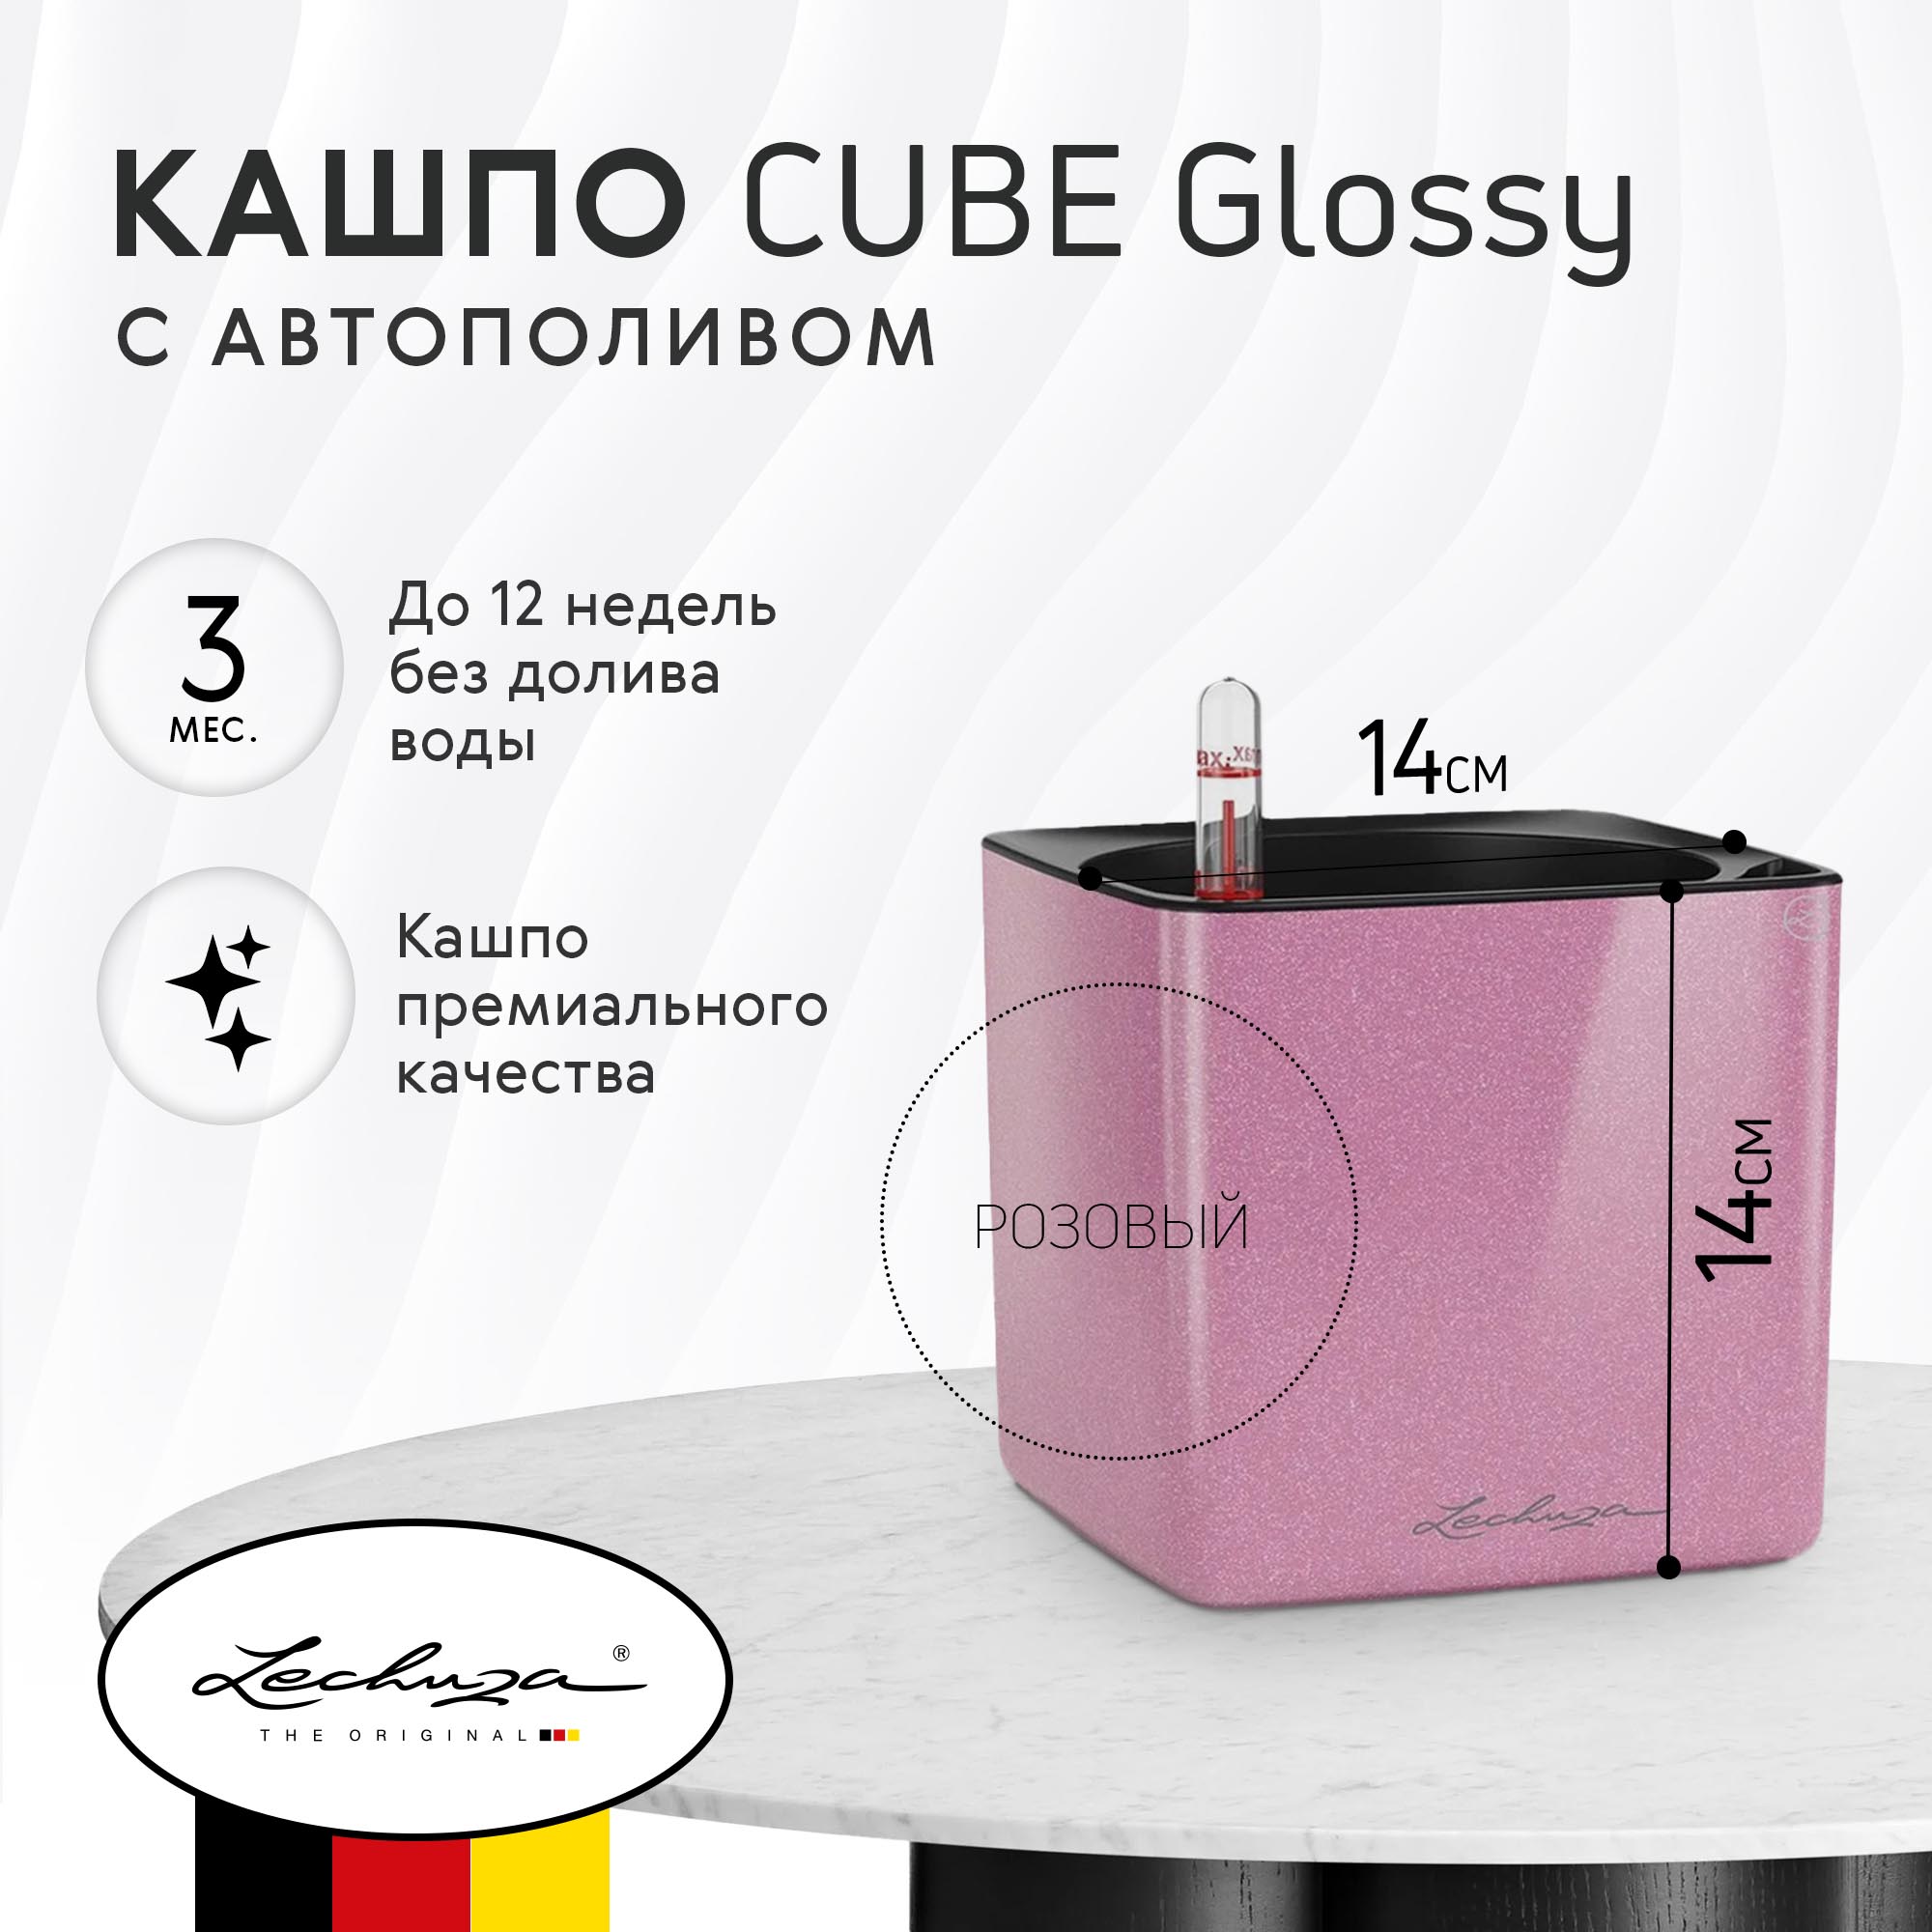 Кашпо Lechuza cube glossy 14х14x14  розовое с автополивом, цвет розовый - фото 2